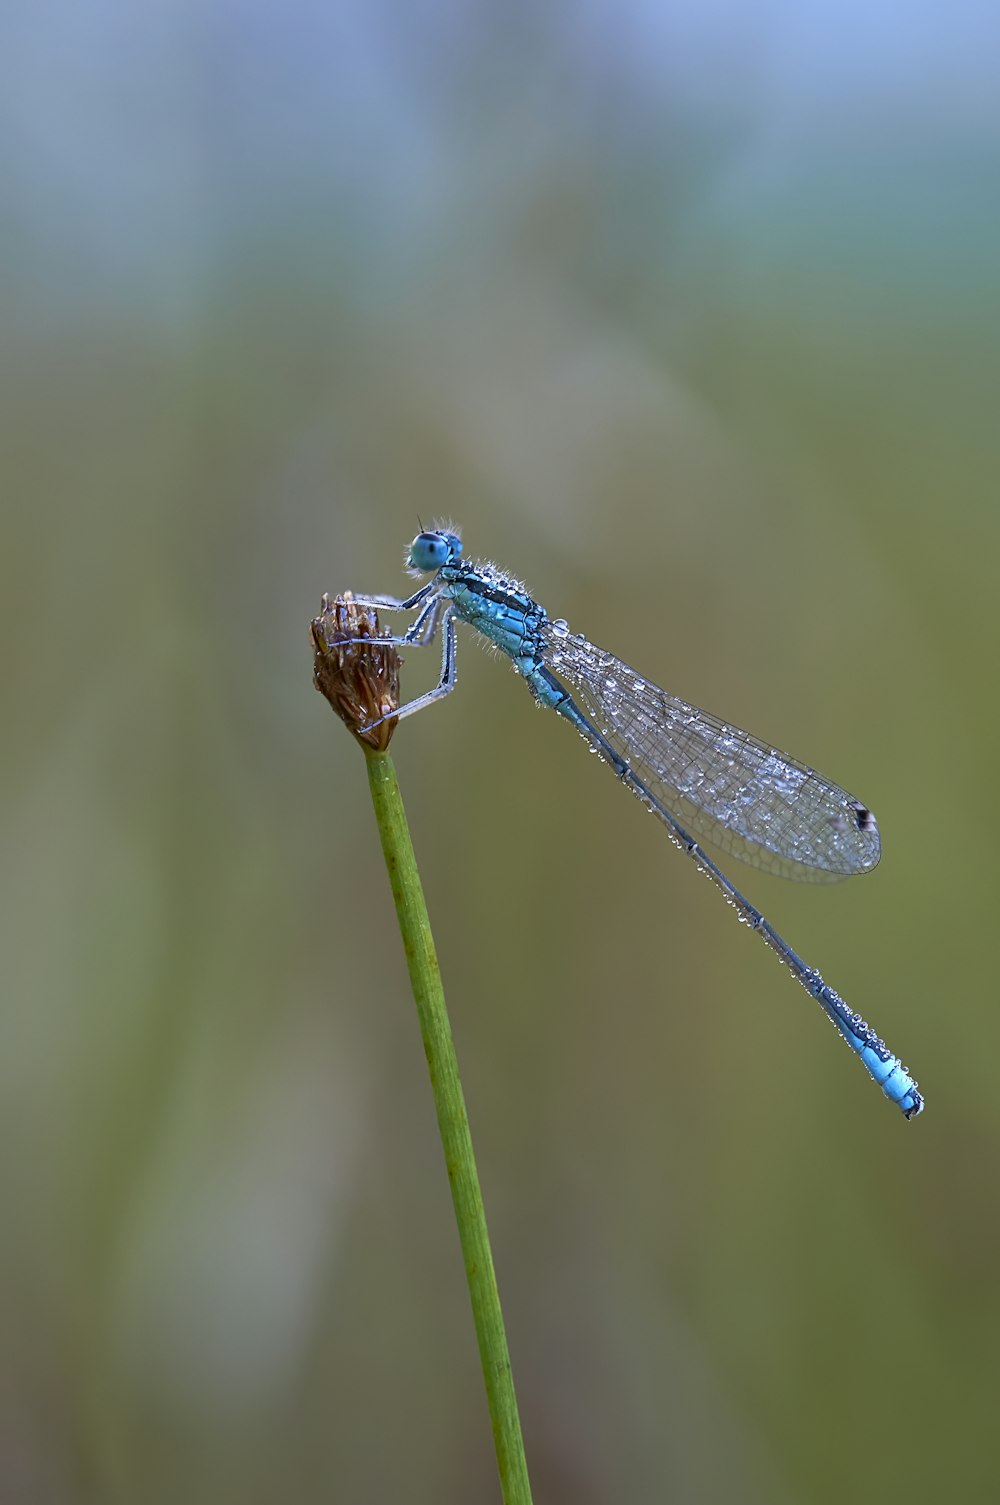 mosca da donzela azul